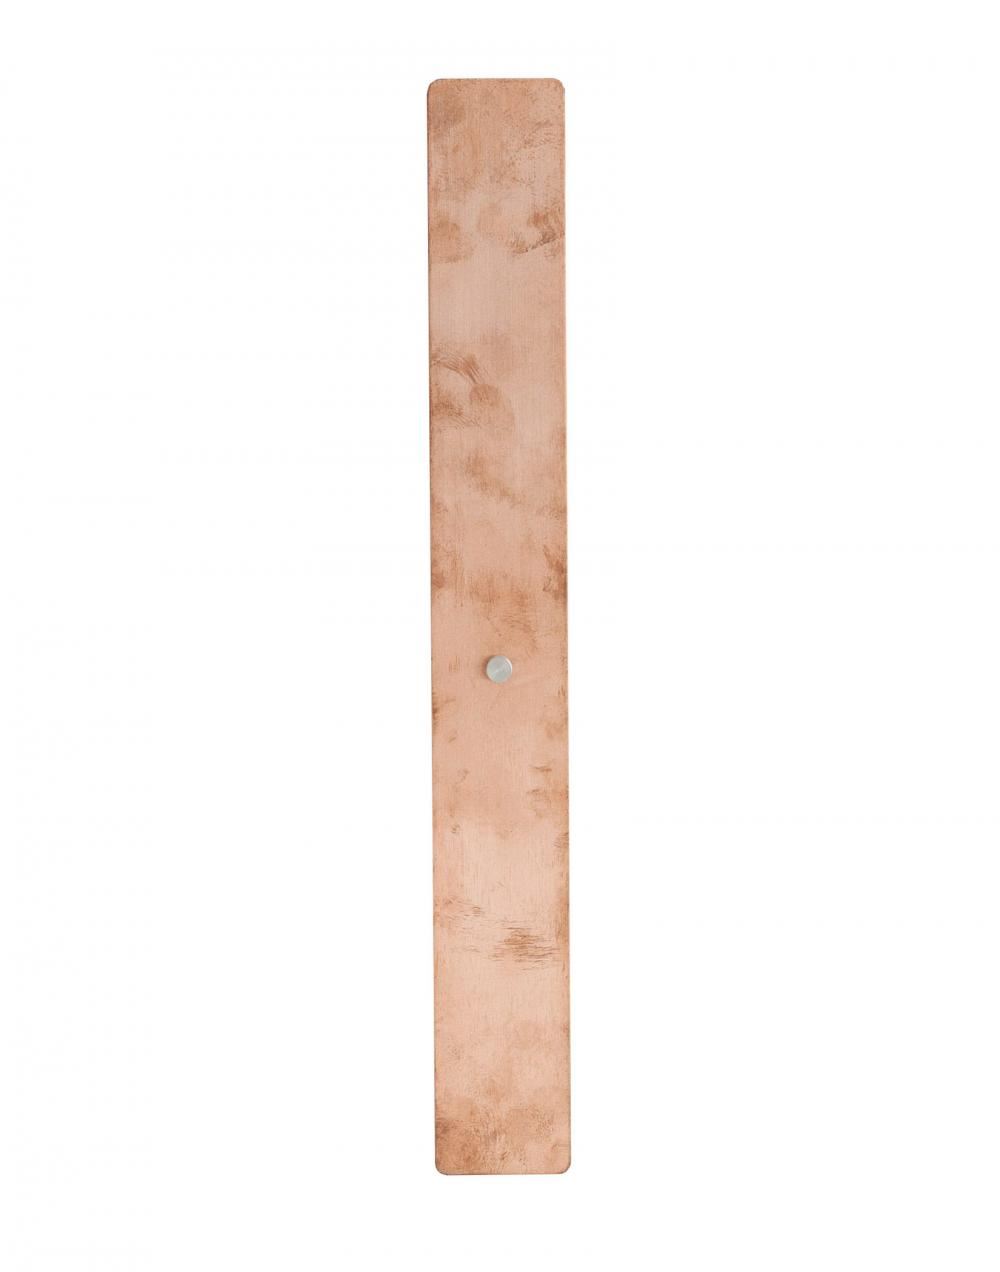 Divar Model Wall Light Copper 50cm Brushed